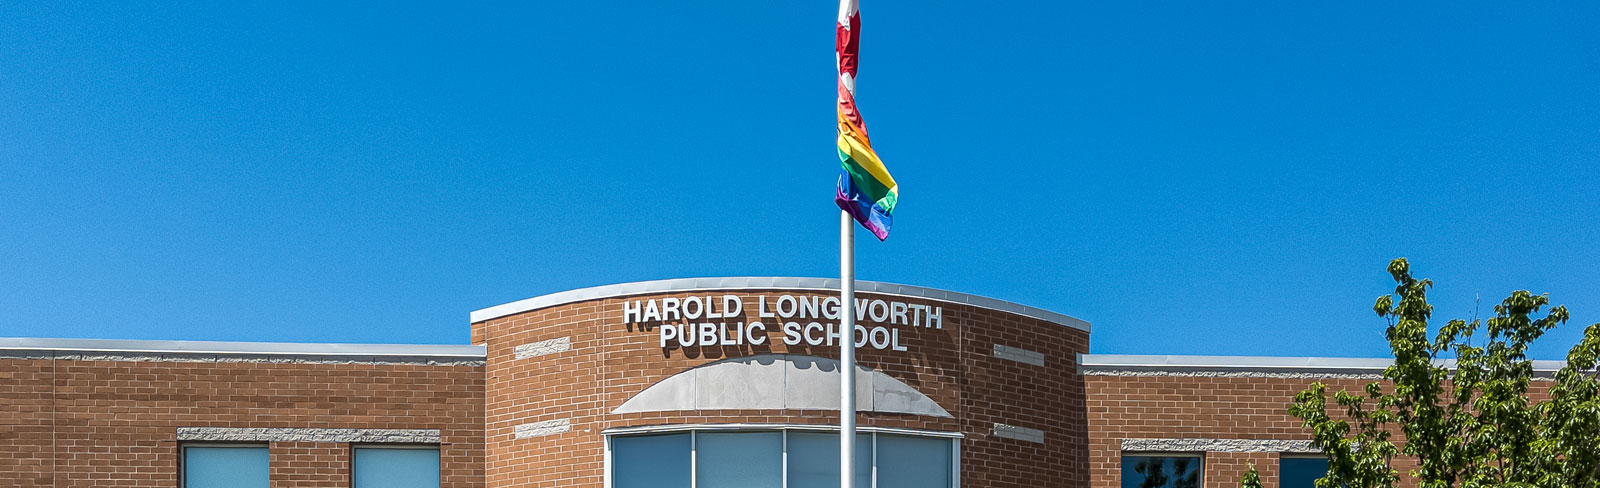 image of Harold Longworth Public School